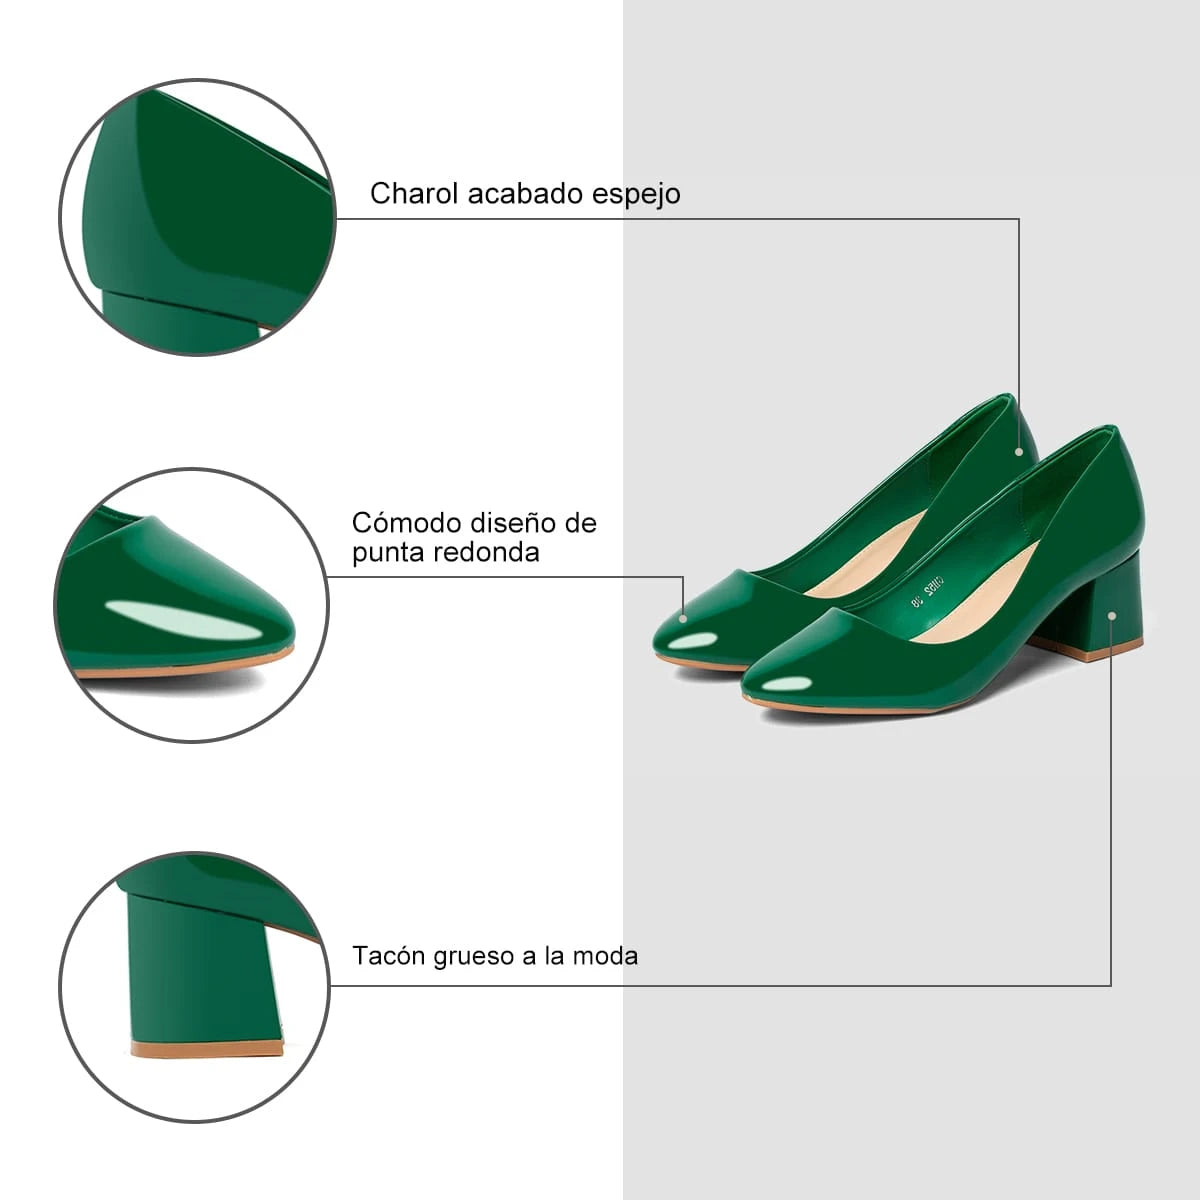 Zapato Mujer Felicia Verde Weide